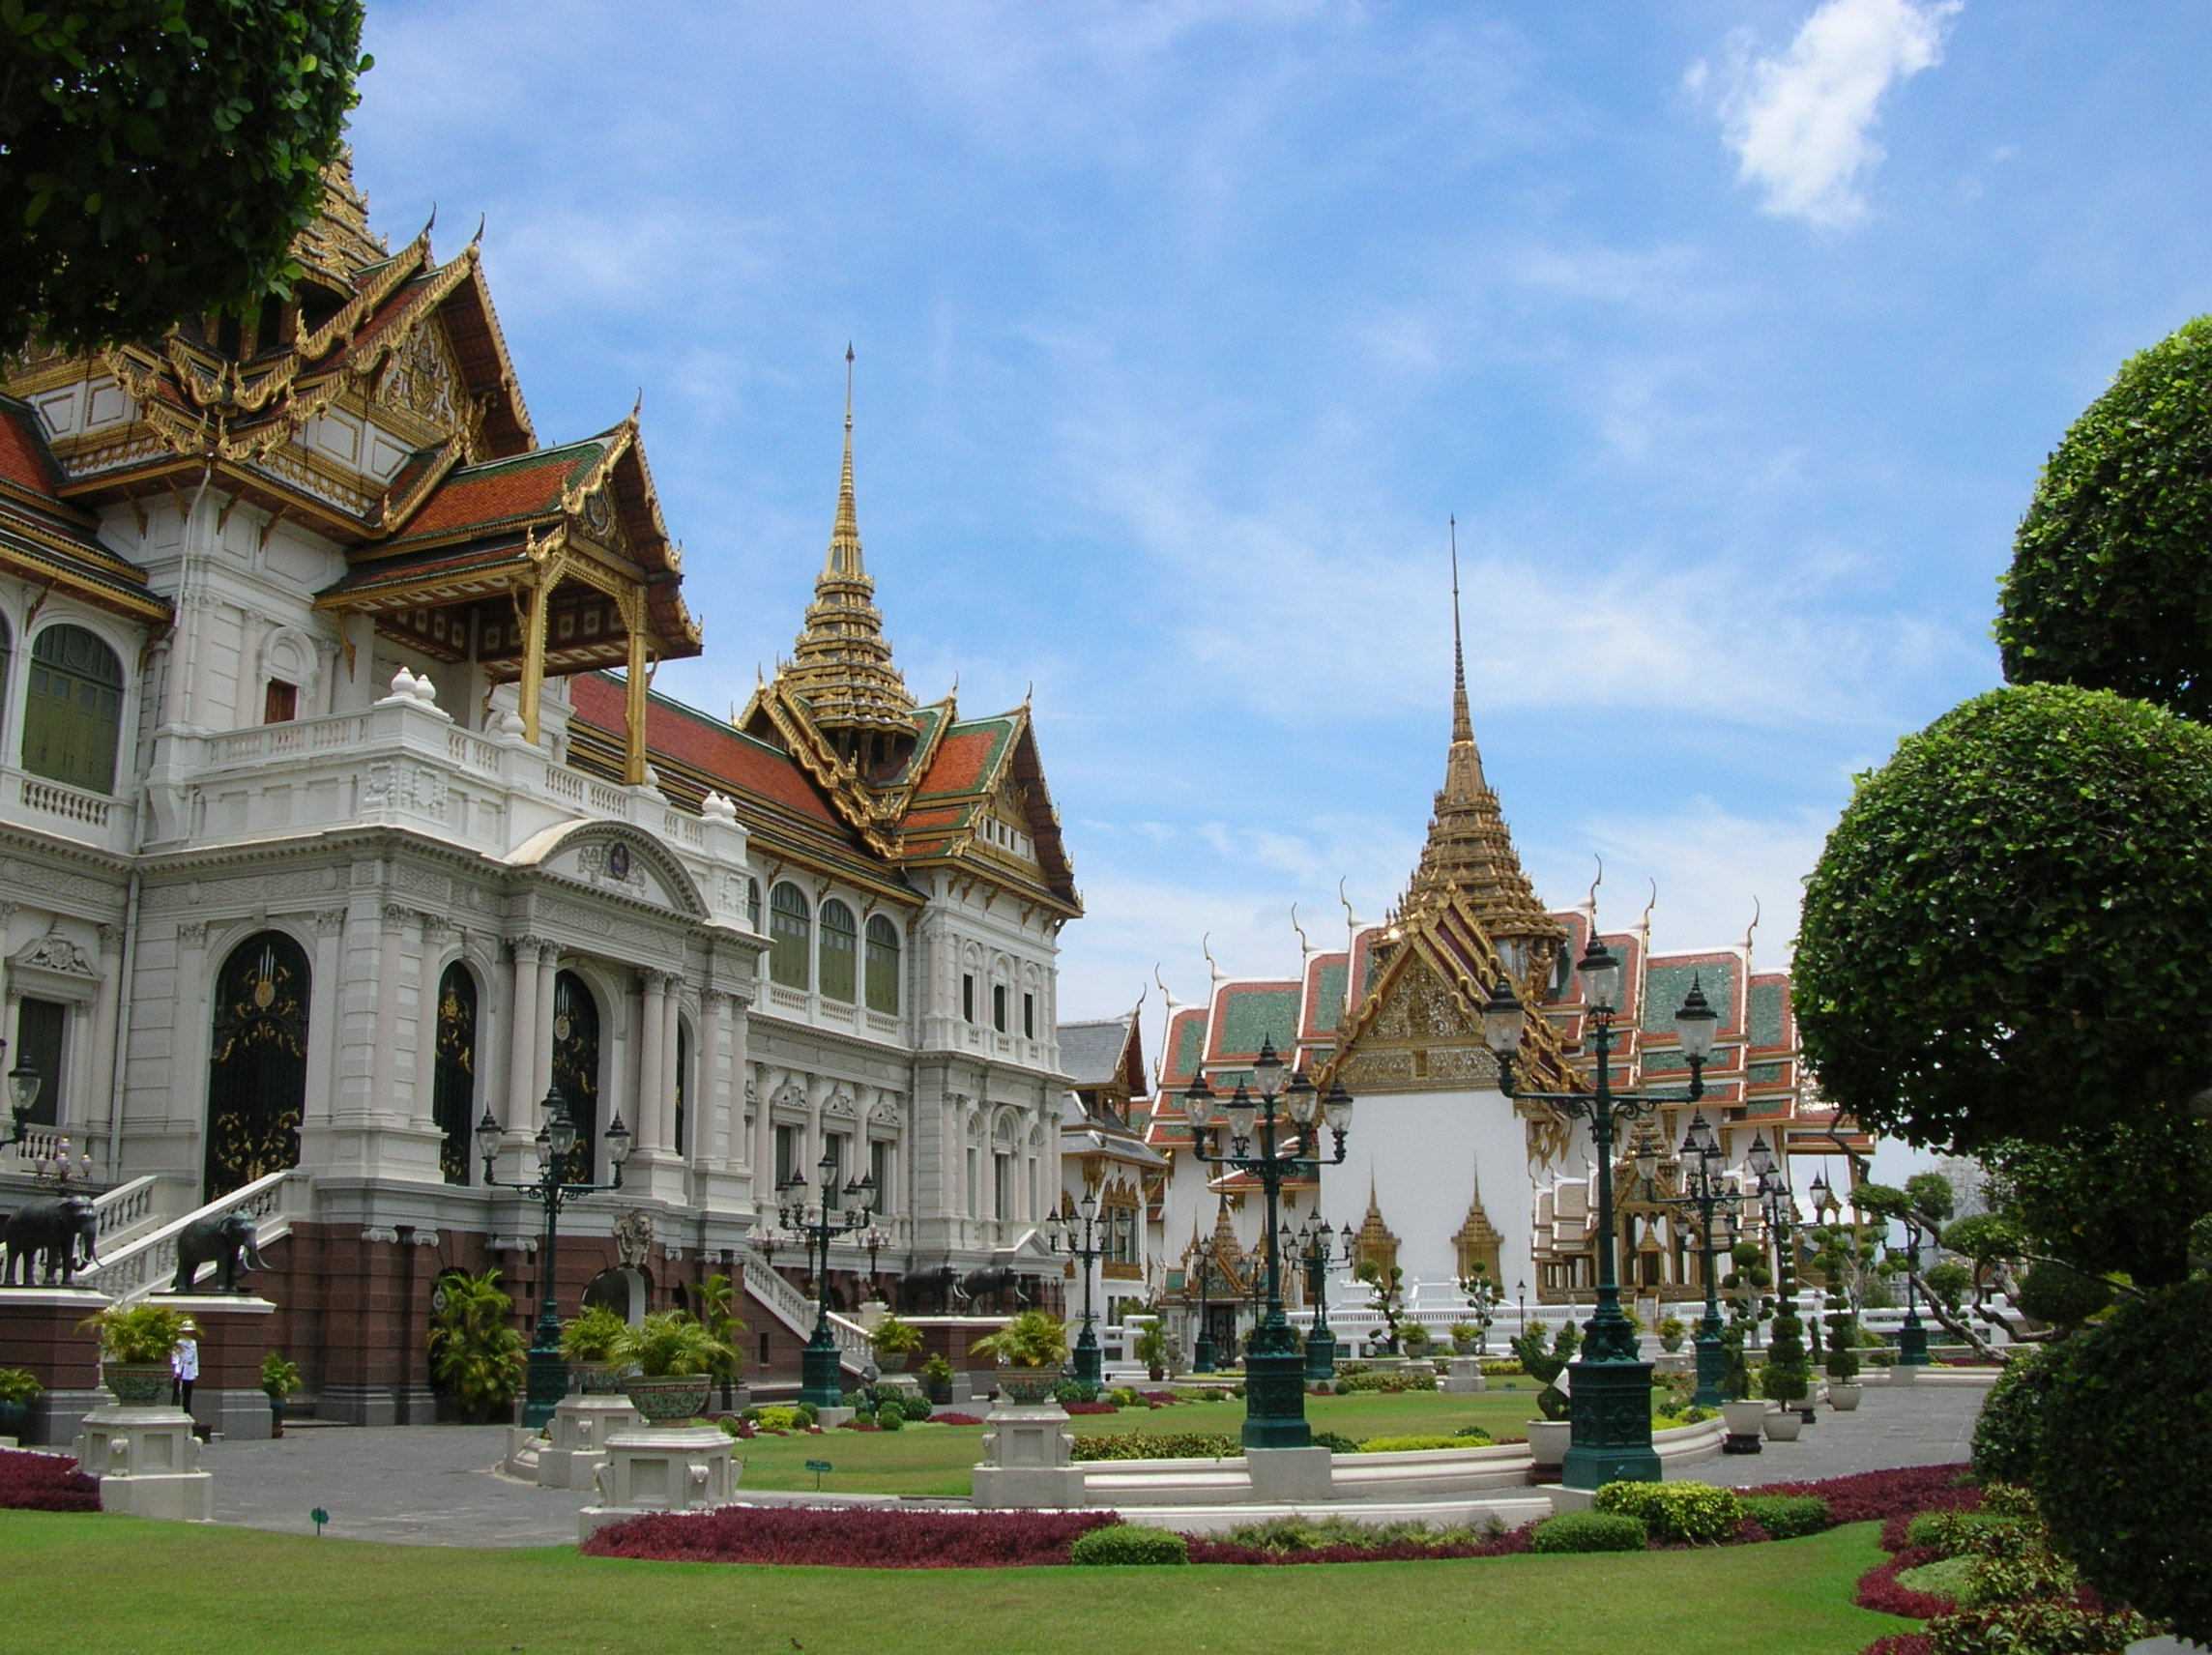 Таиланд города. Королевский дворец в Тайланде. Большой Королевский дворец Бангкок Таиланд. Дворец короля в Бангкоке. Императорский дворец Тайланд.